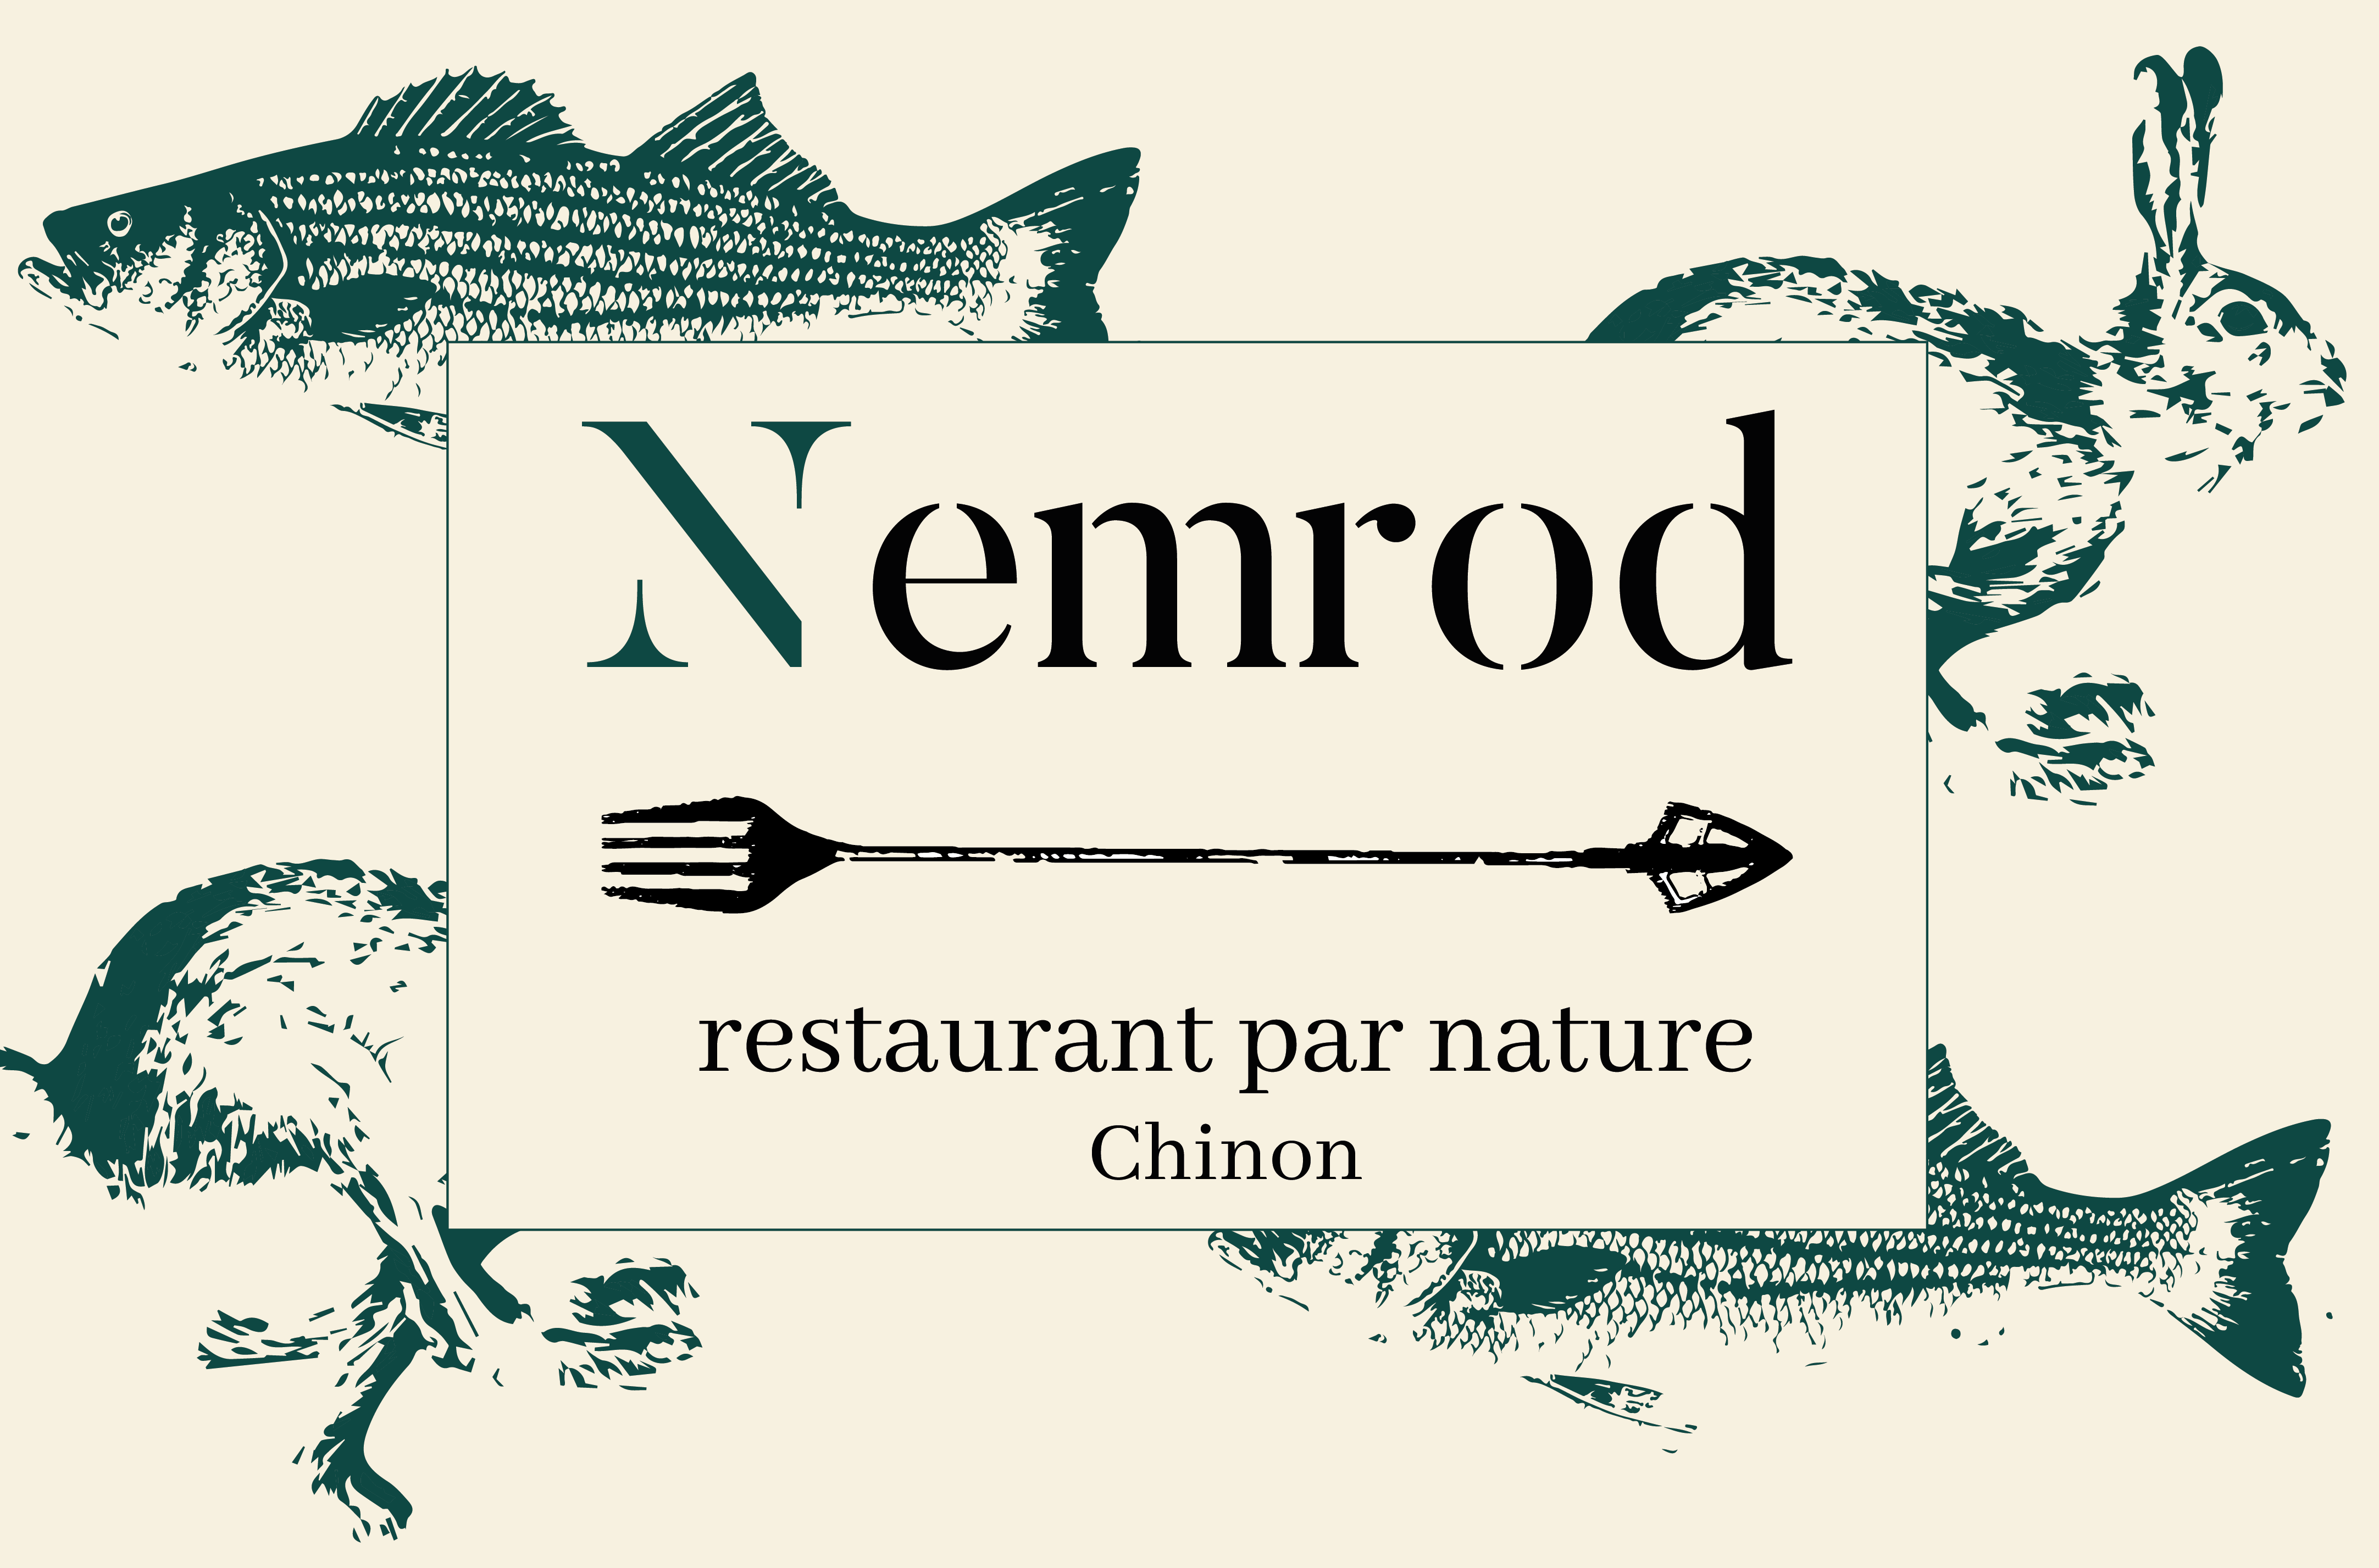 Nemrod restaurant par nature